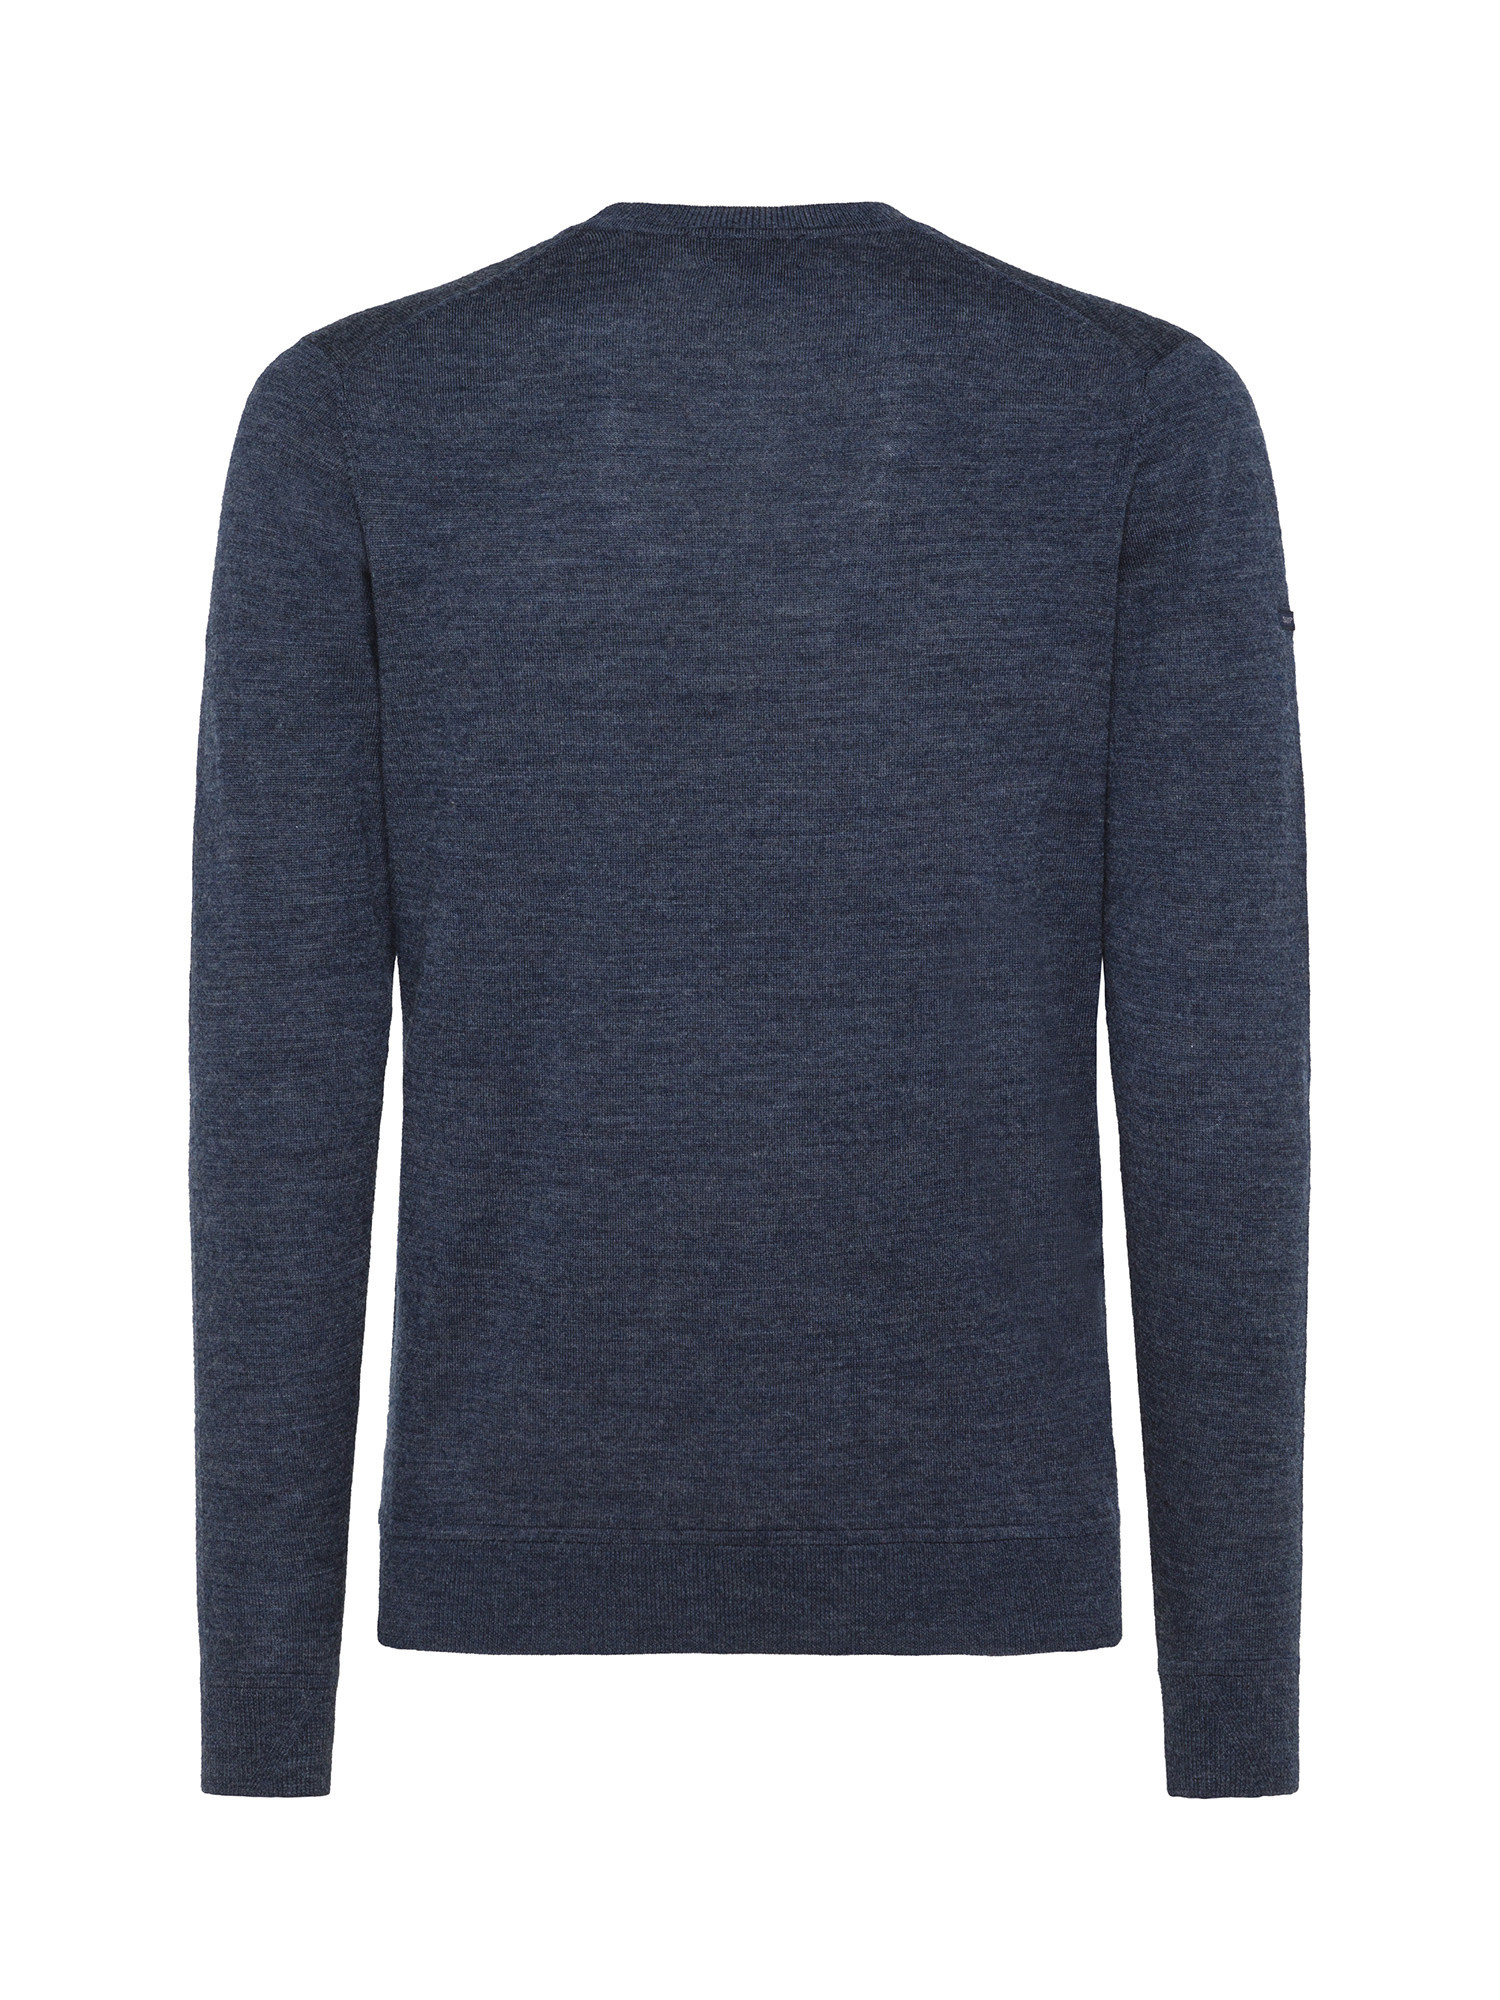 Superdry - Merino wool crewneck sweater, Dark Blue, large image number 1